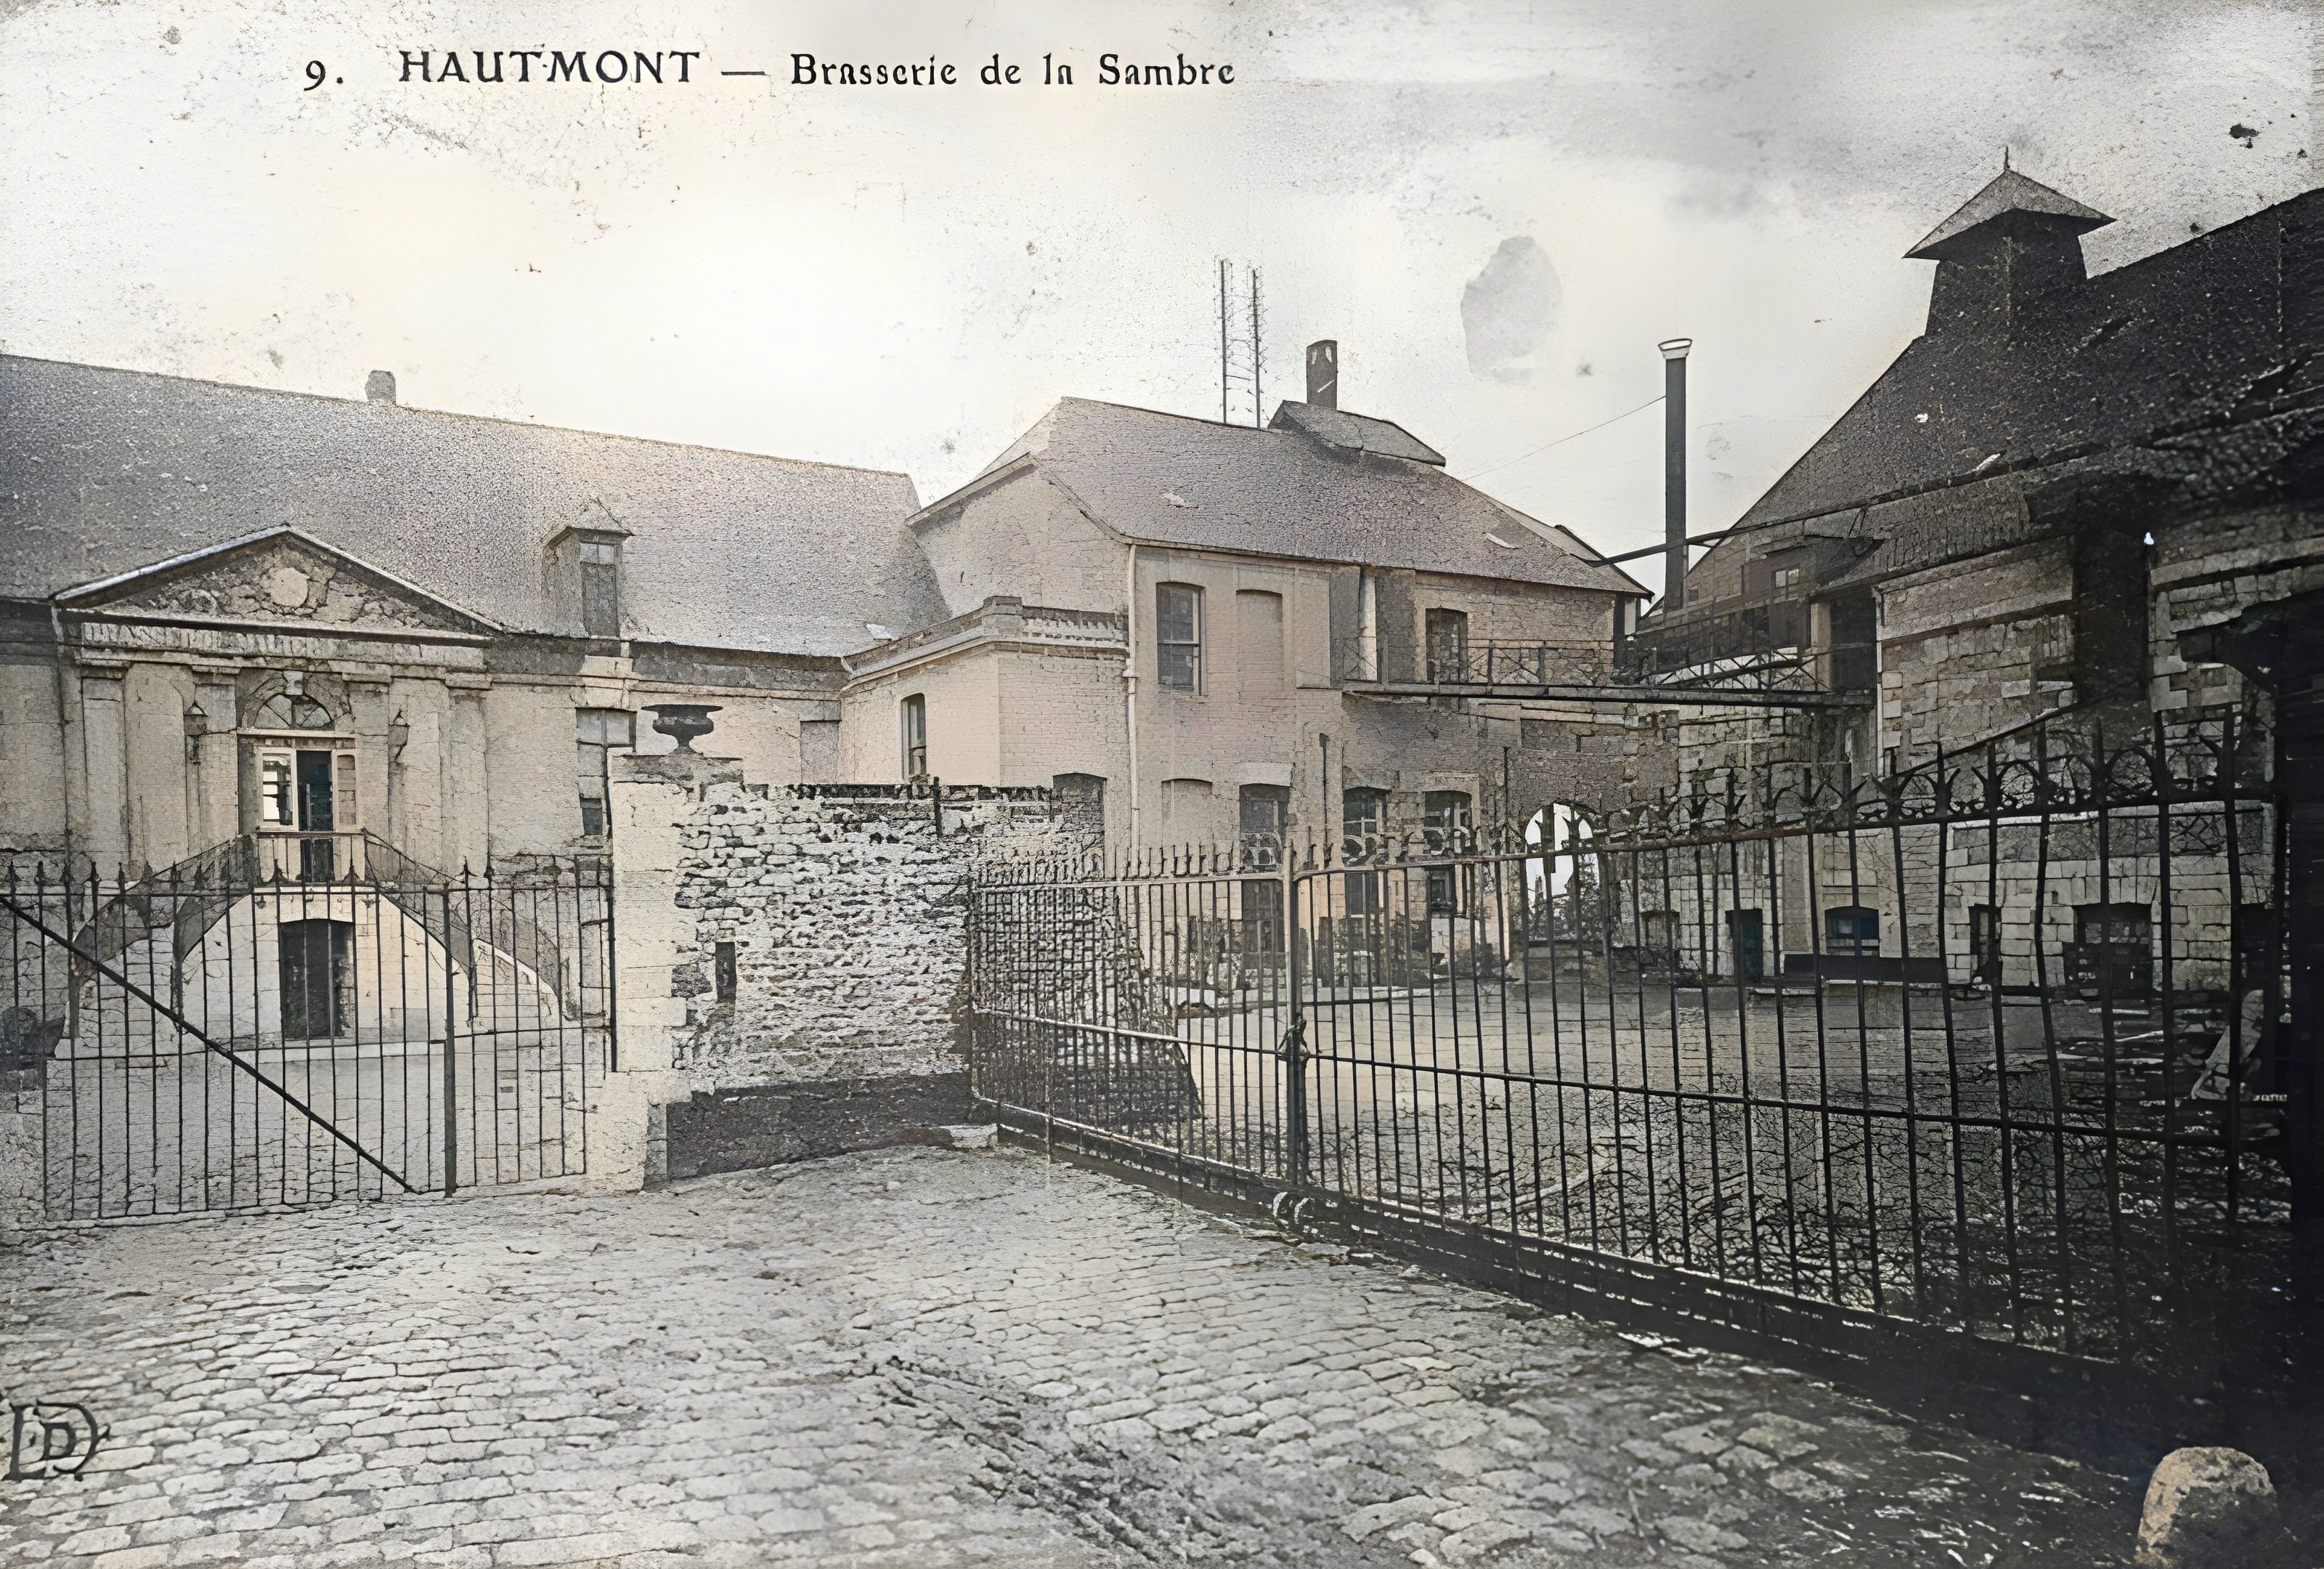 Hautmont: brasserie malterie